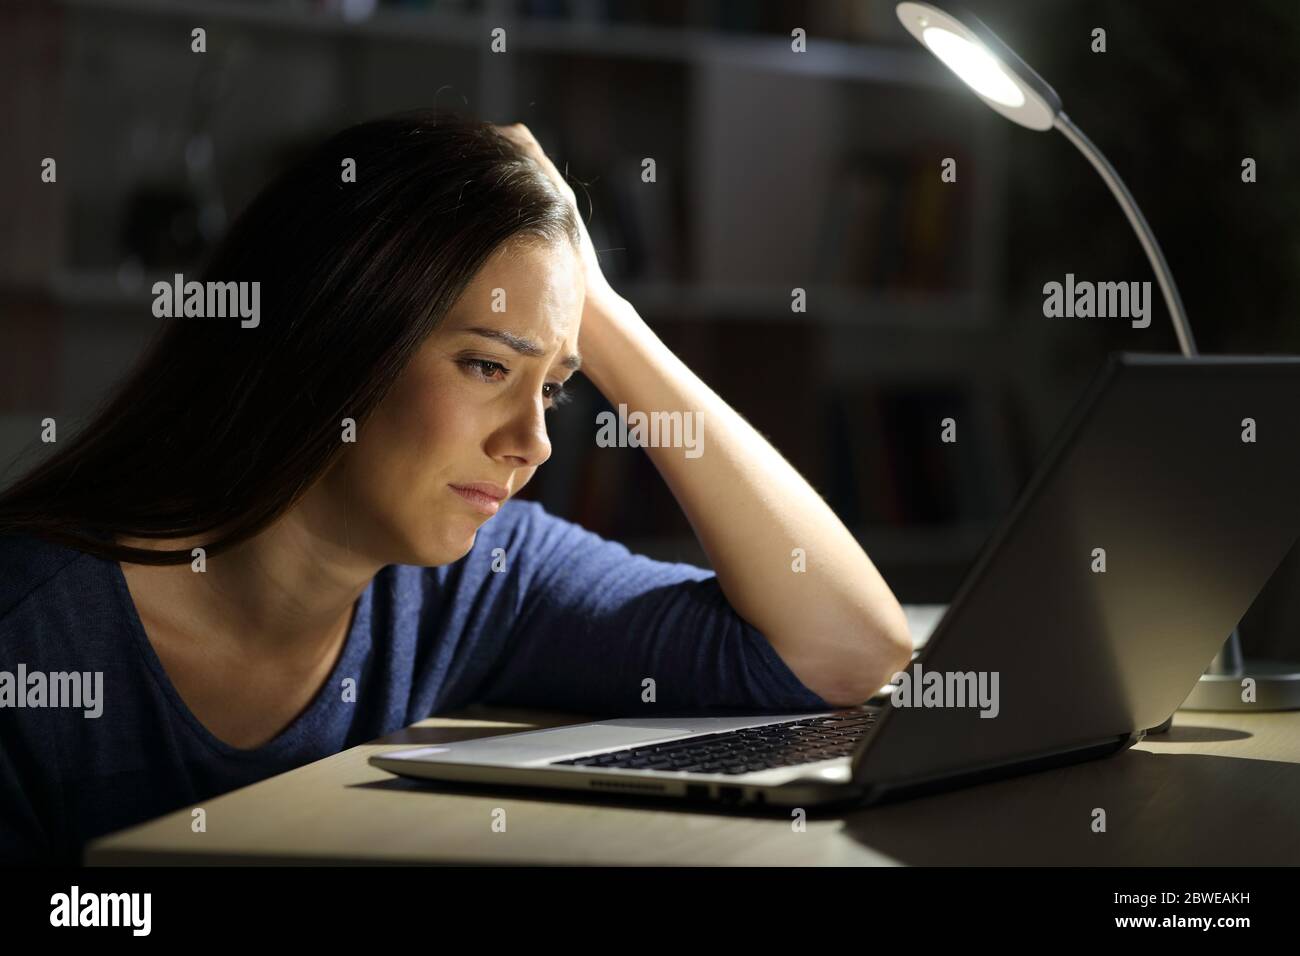 Sad woman looking at laptop complaining sitting alone at night at home Stock Photo